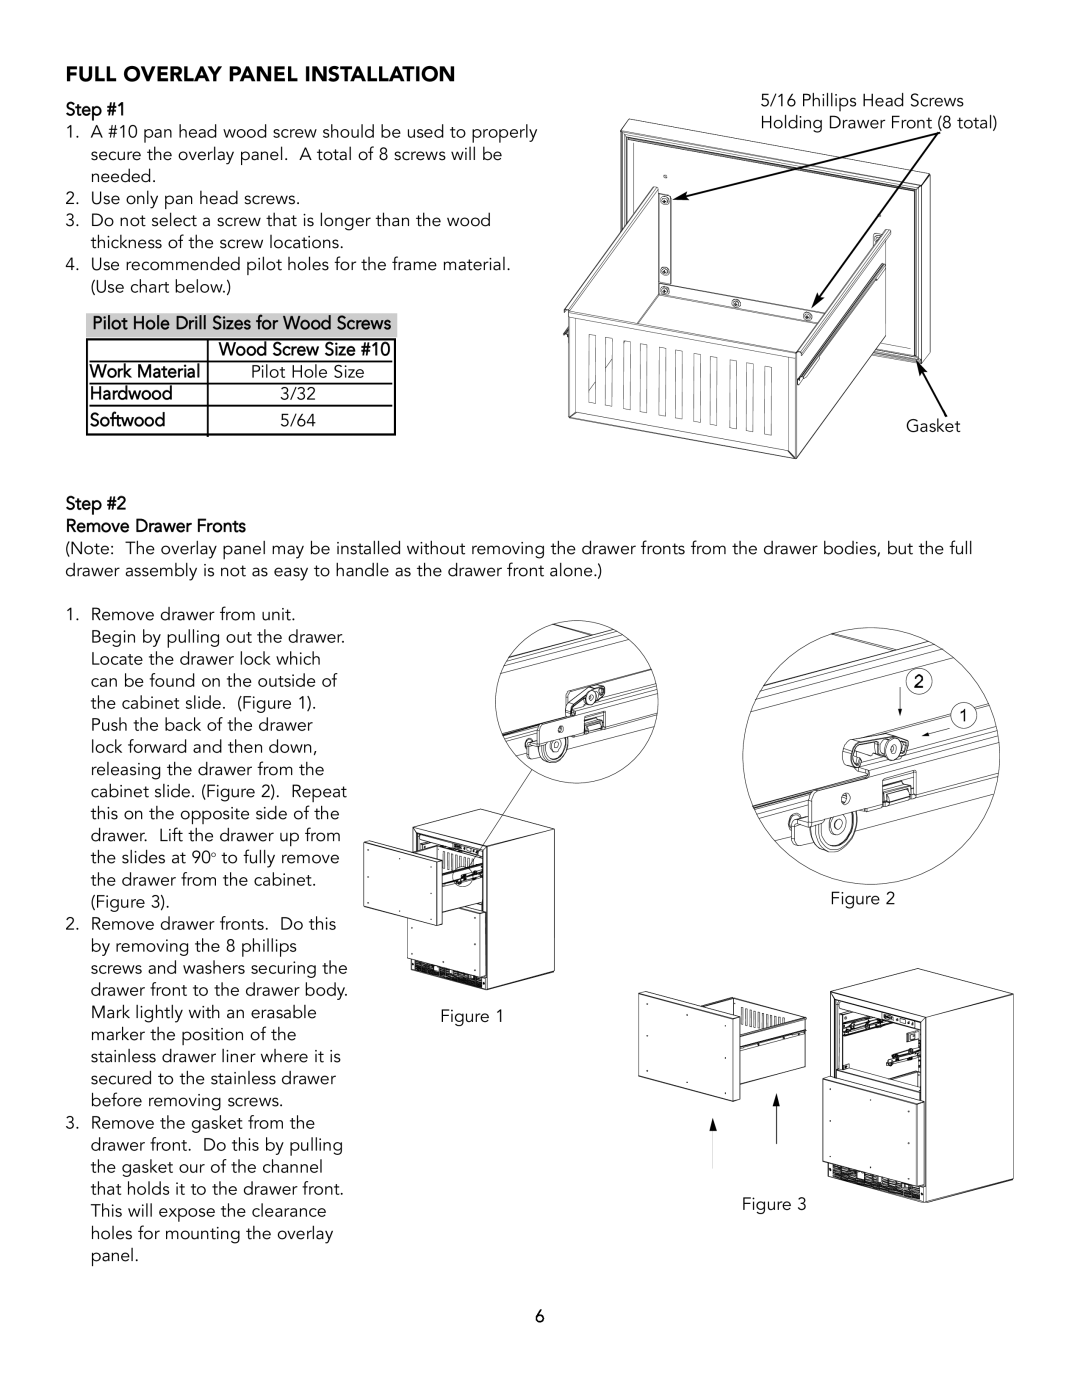 Viking Refrigerator Drawer manual Full Overlay Panel Installation 